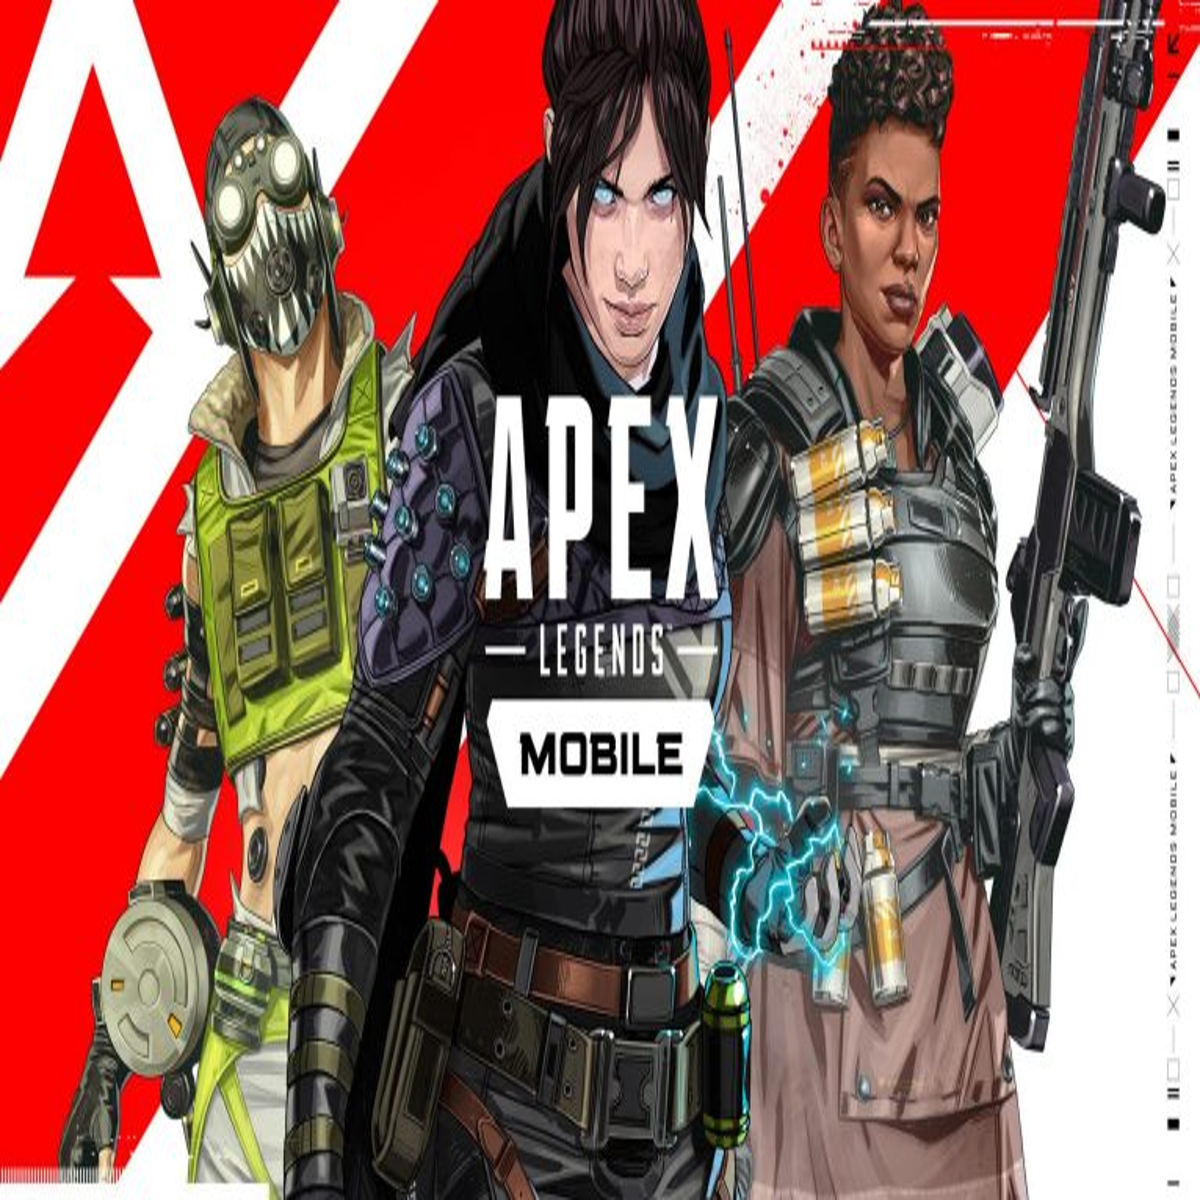 Apex Legends Mobile review - battle royale sticks the landing on phones